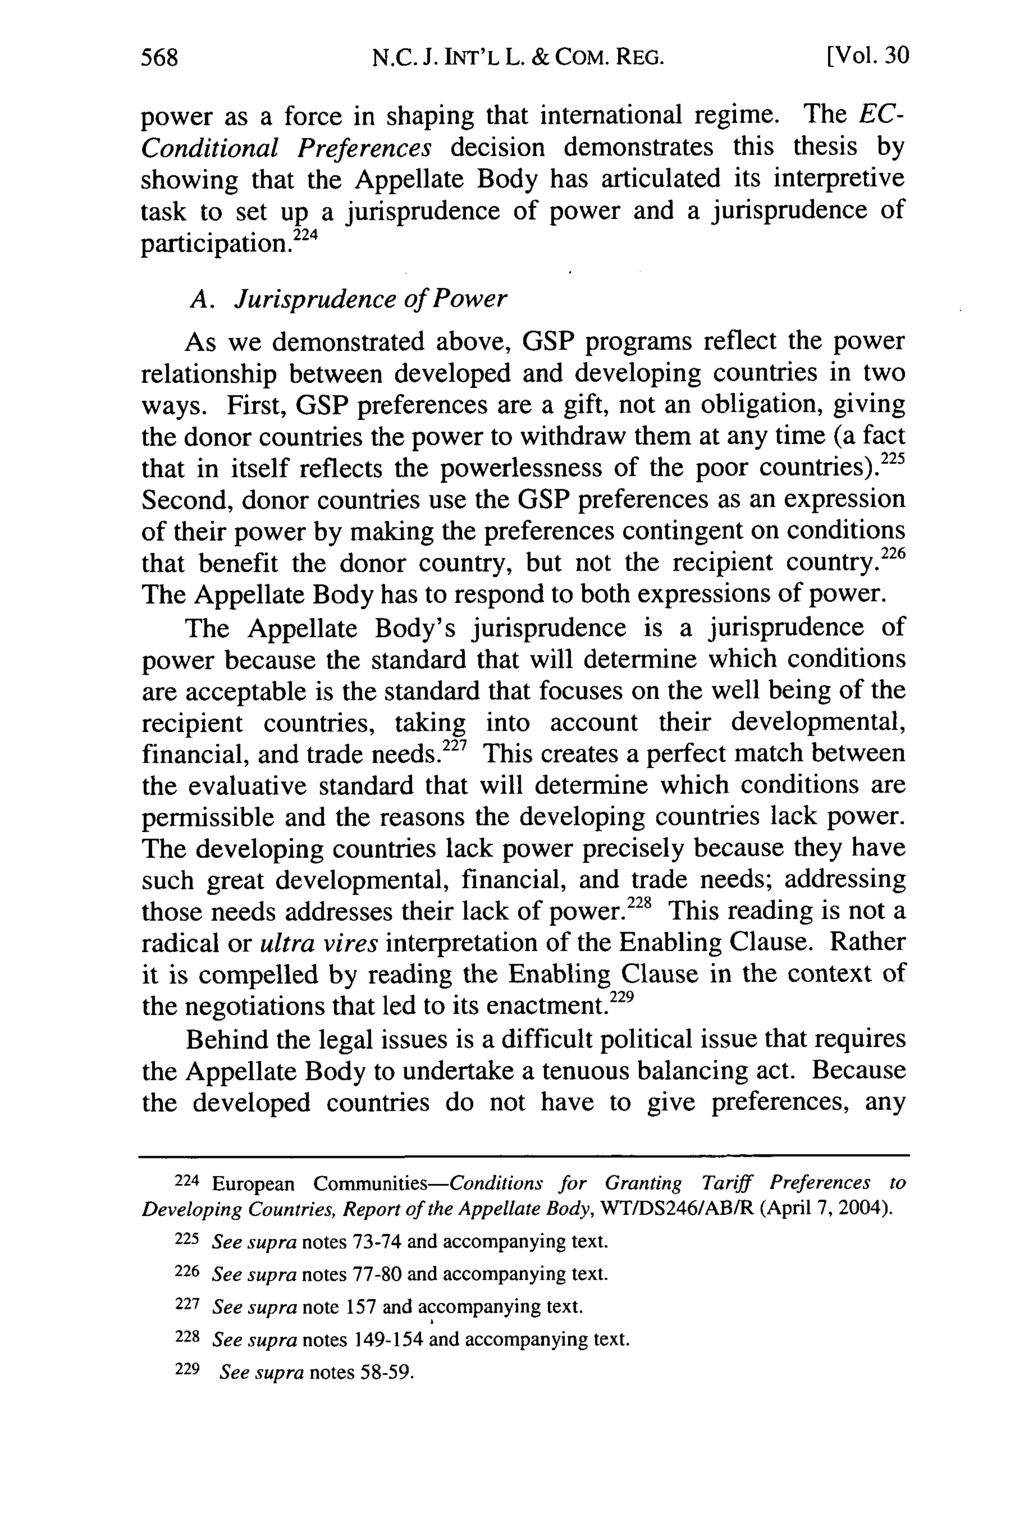 N.C. J. INT'L L. & COM. REG. [Vol. 30 power as a force in shaping that international regime.